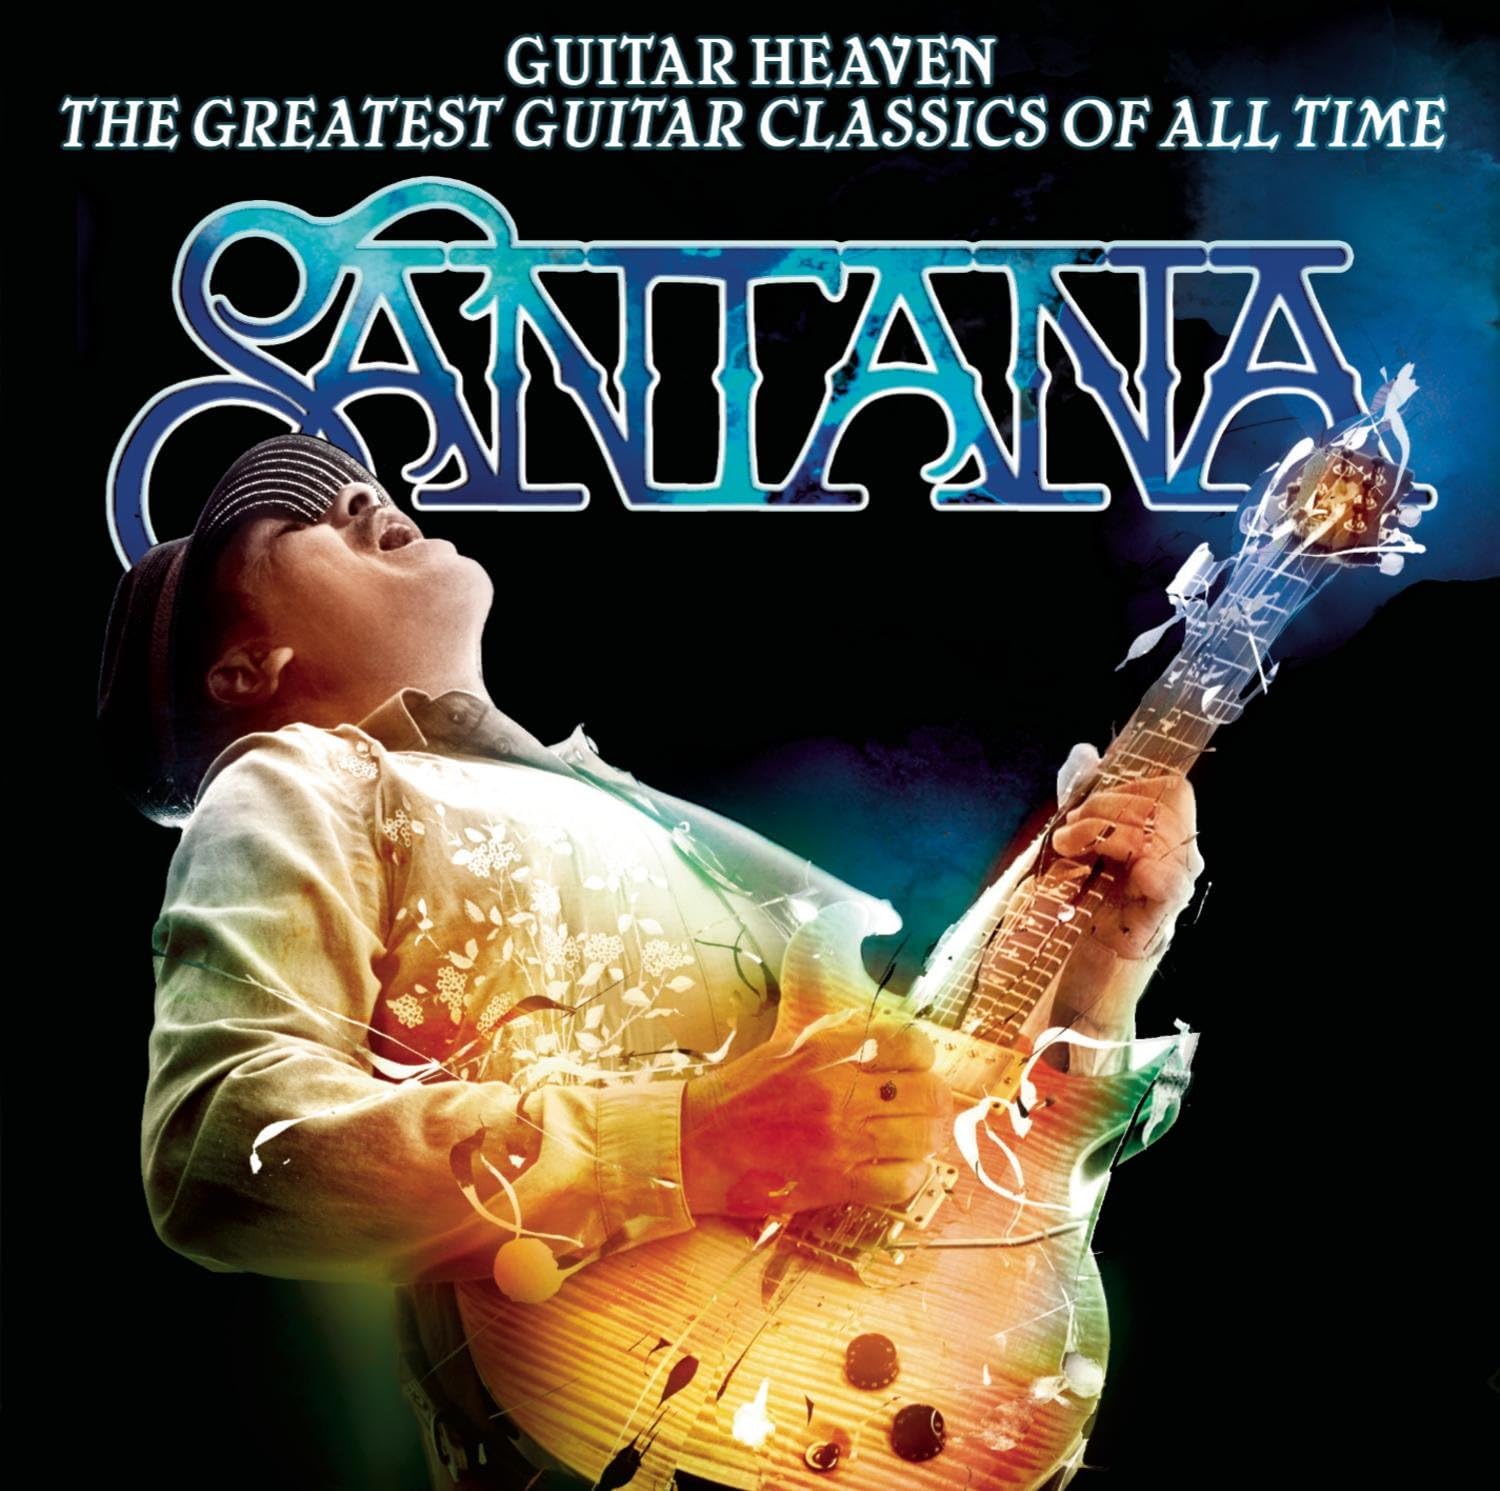 Guitar Heaven - The Greatest Guitar Classics of All Time | Santana